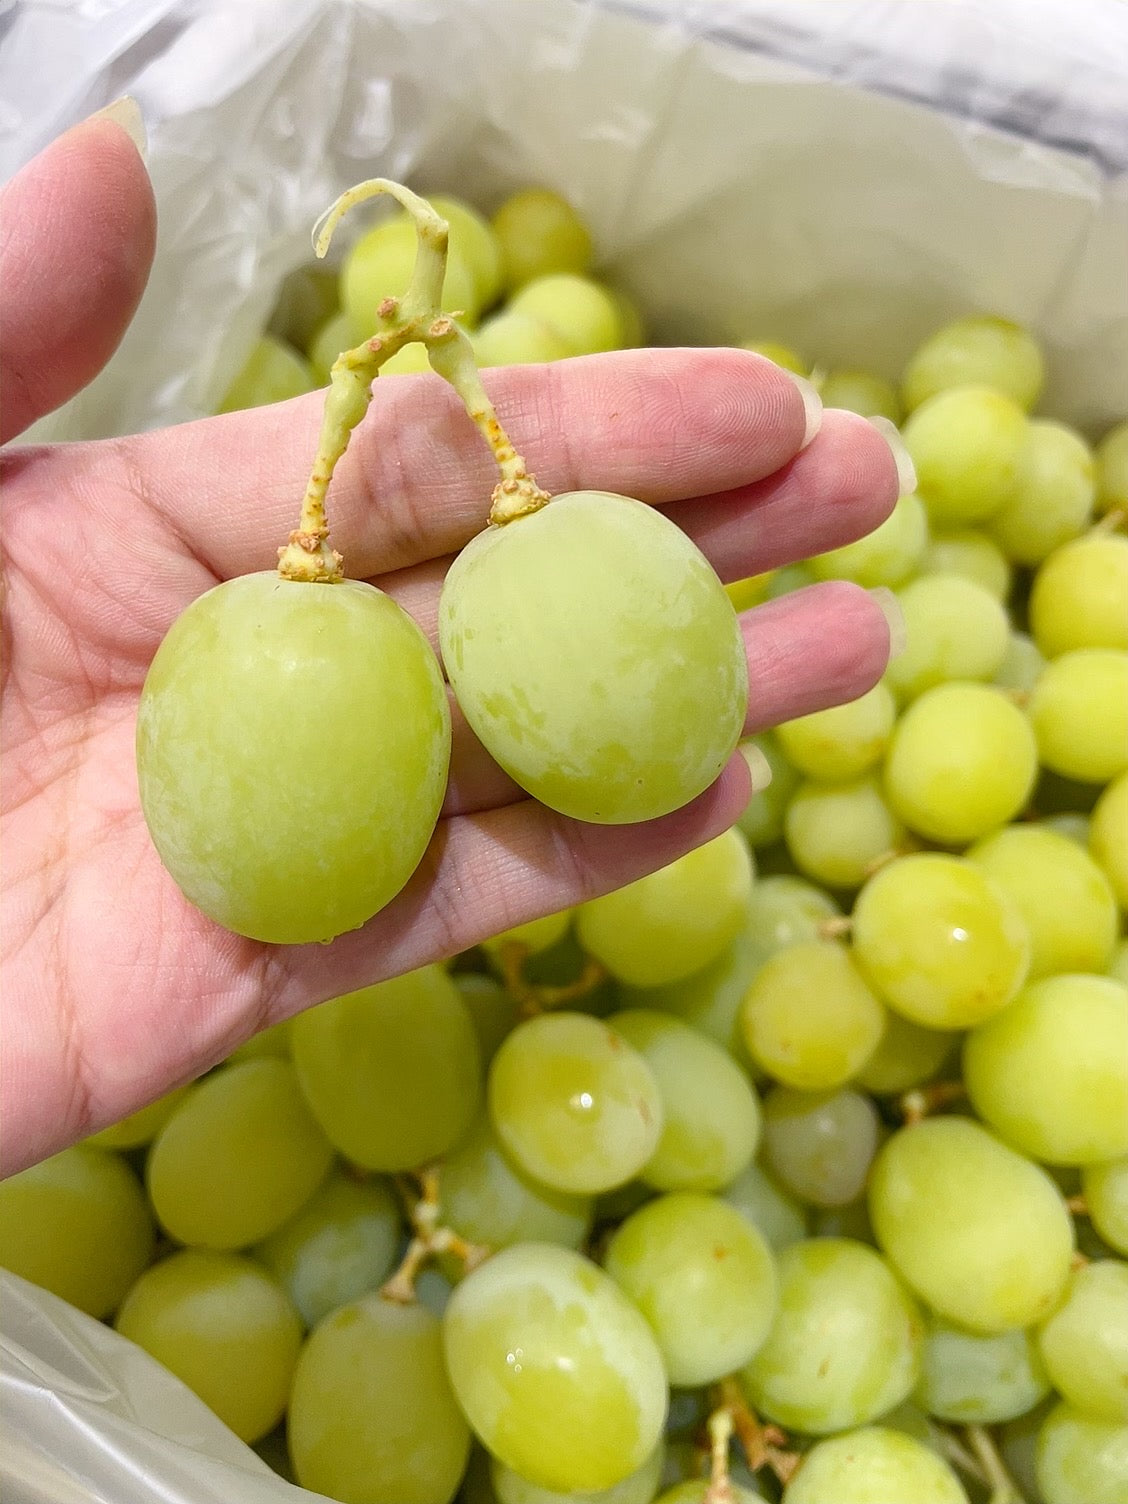 Kyoho-King-Shine-Muscat-Grapes---Seedless,-No-Need-to-Peel---Box-of-4.5kg -1